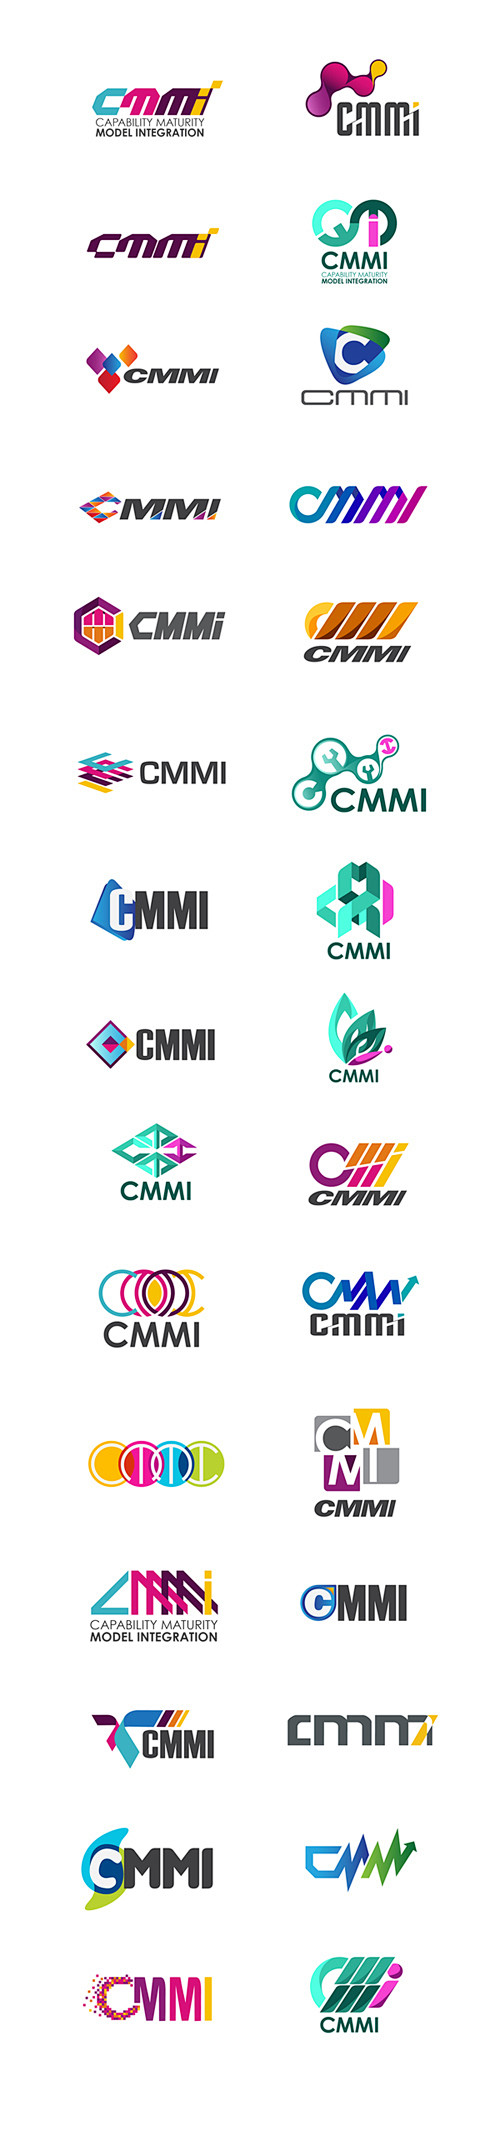 CMMi Logo Design on ...